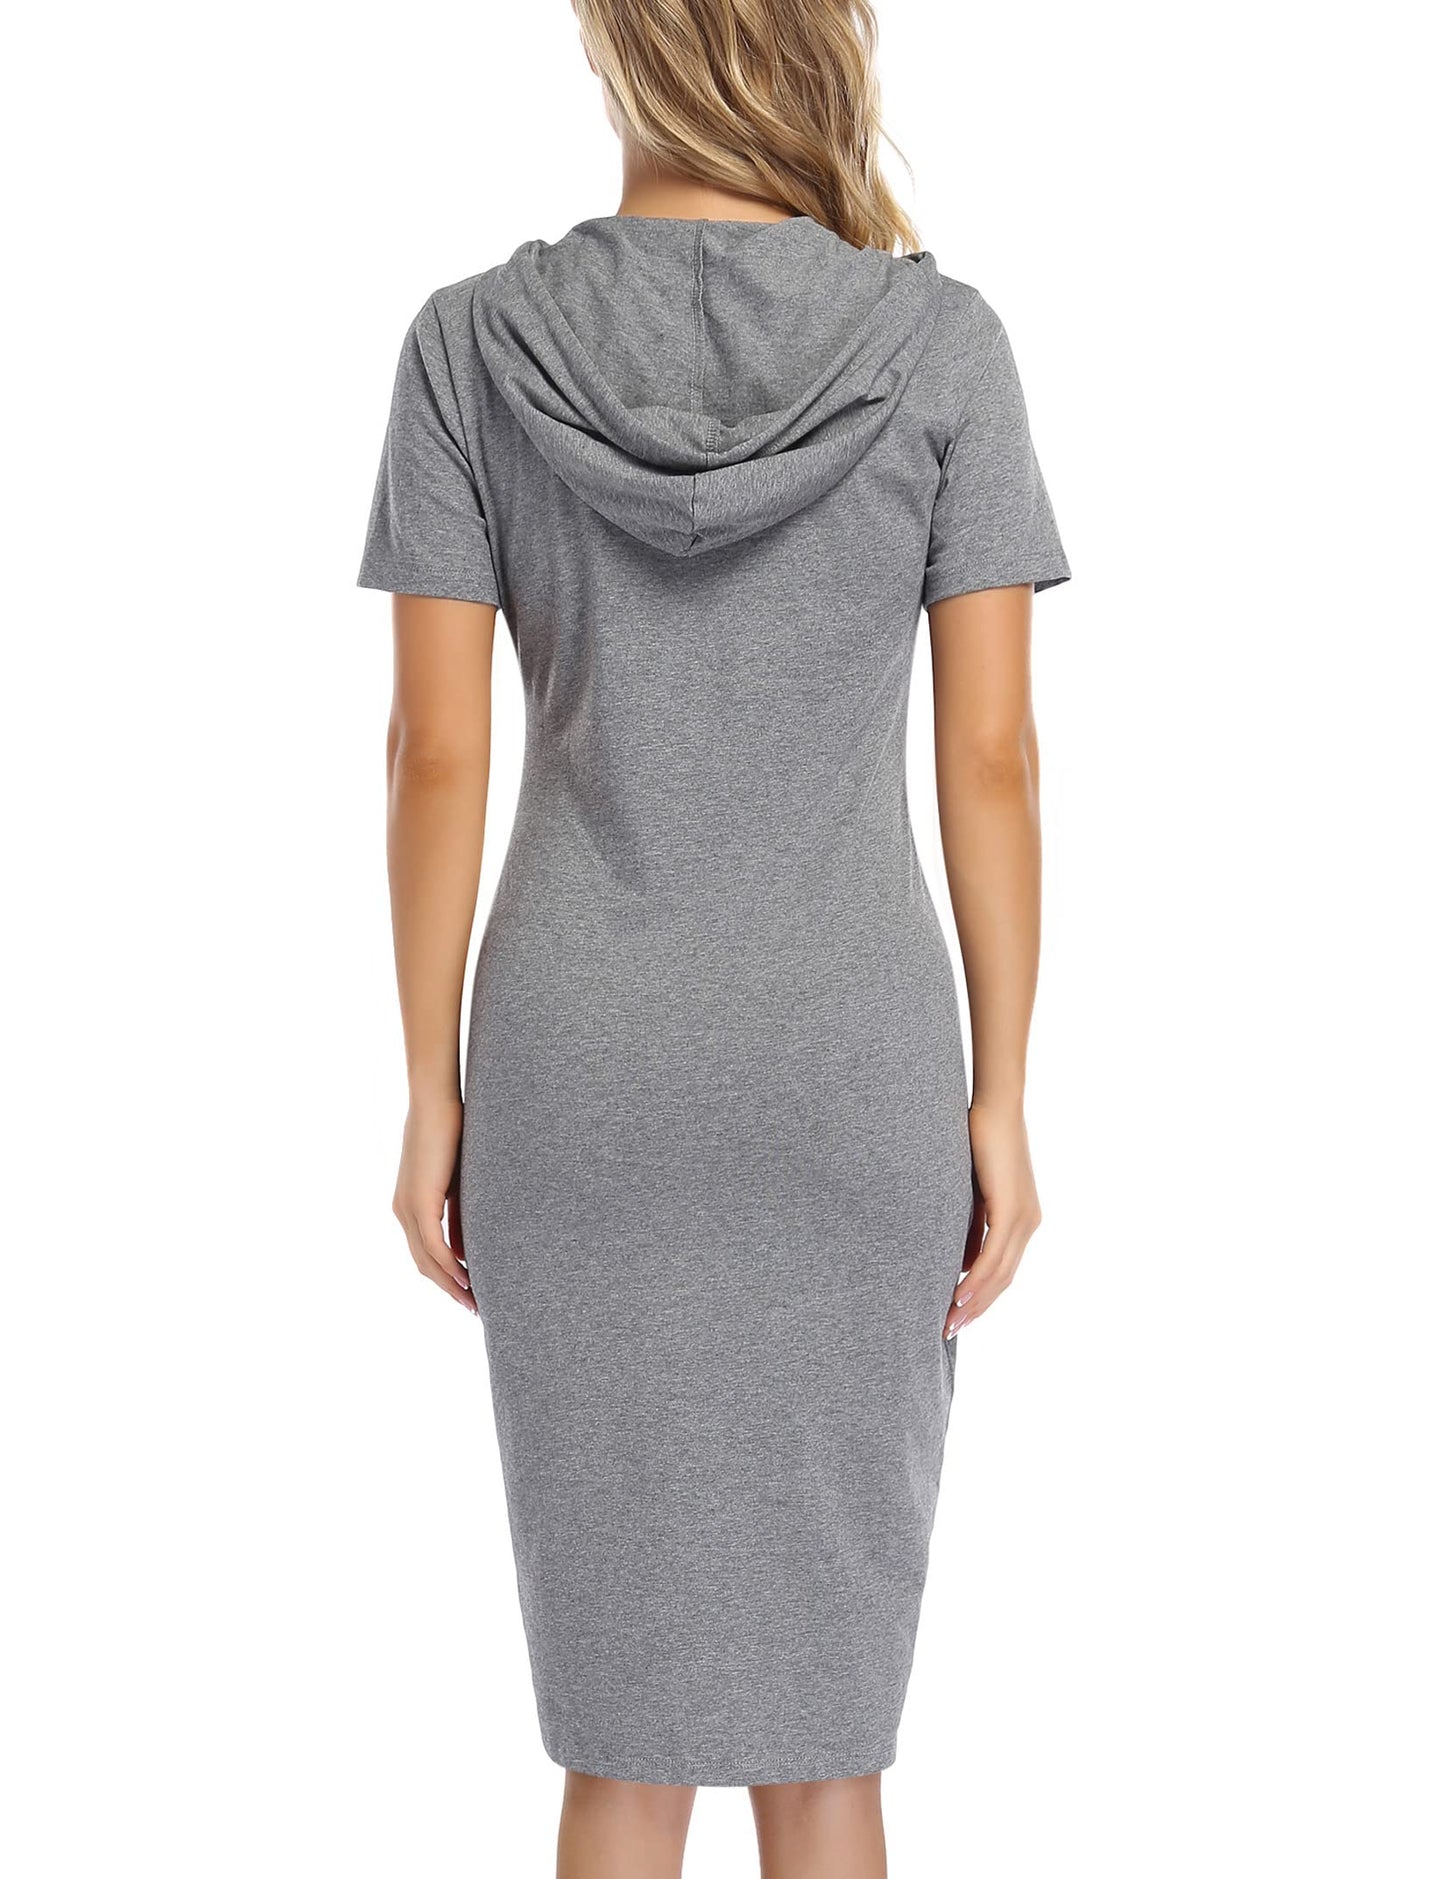 Women's Casual Short Sleeve Sweatshirt Print Pocket Pullover Hoodie Dress